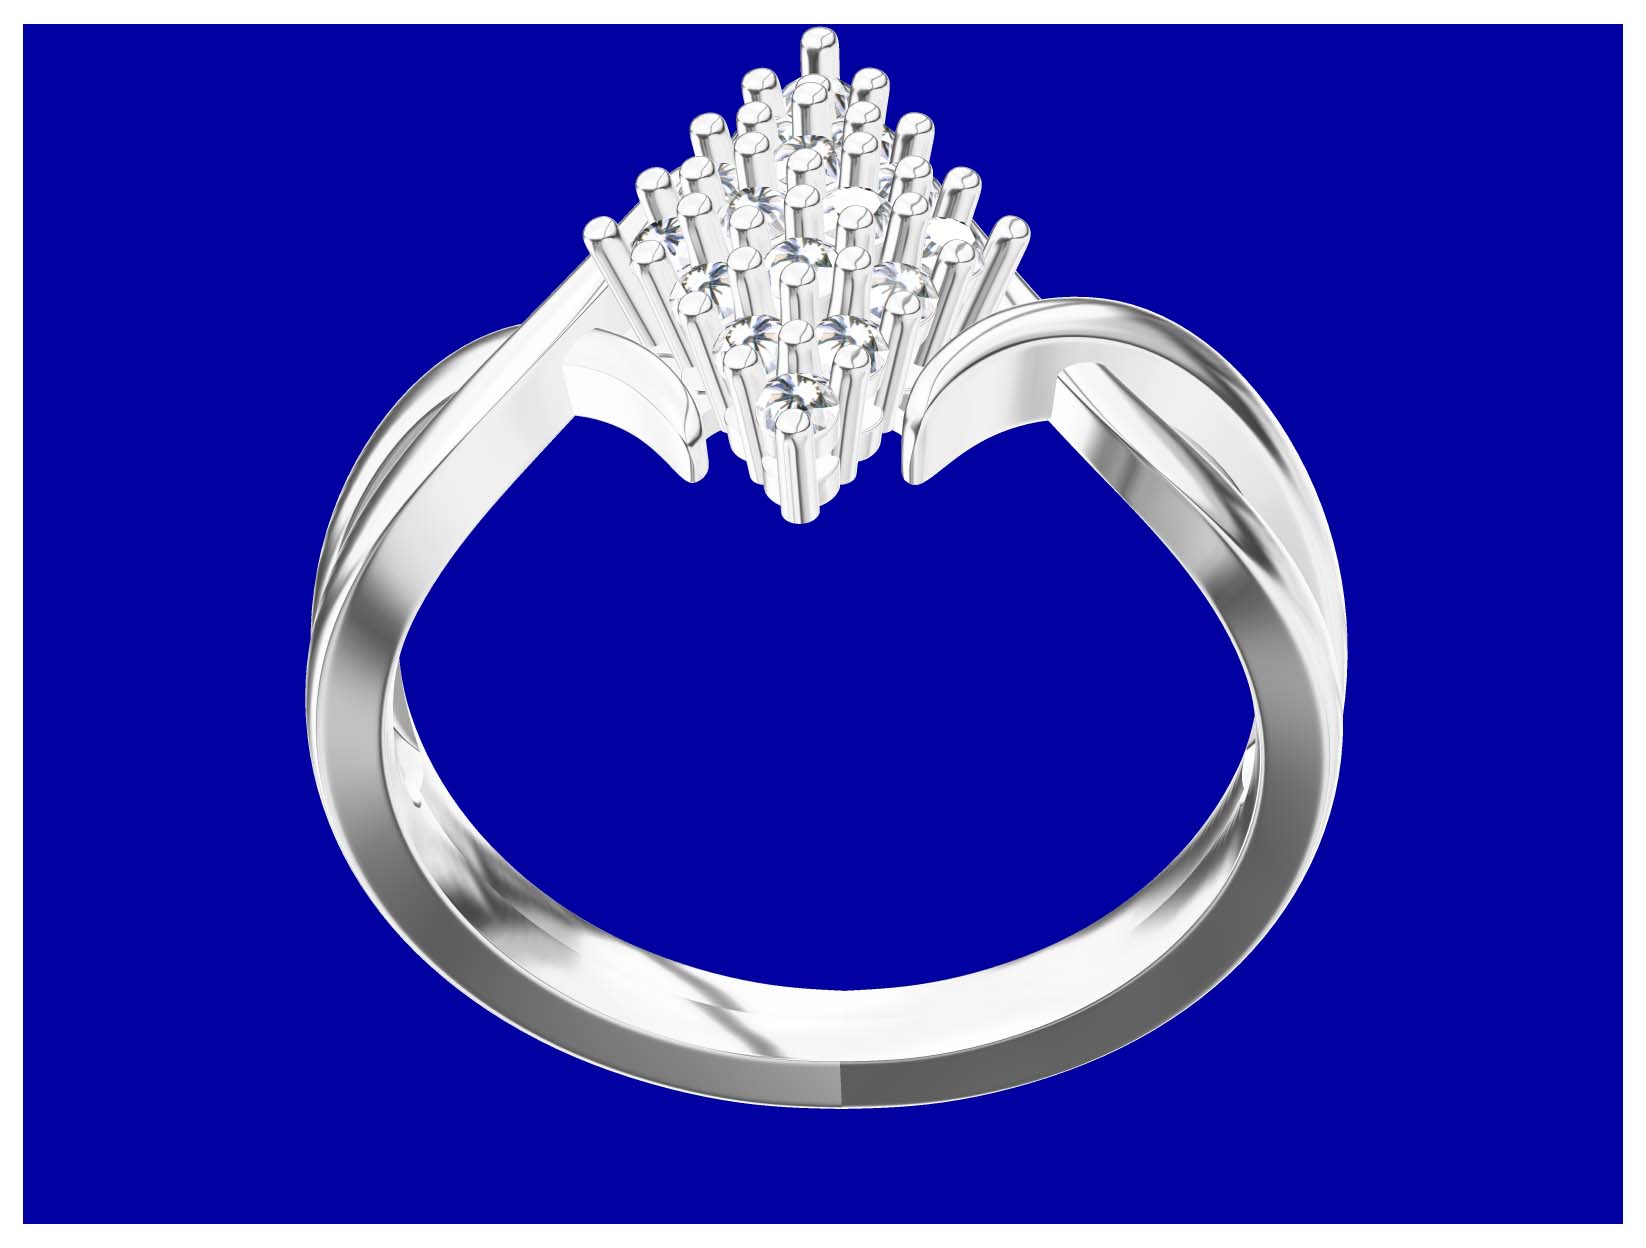 Rectangle diamond ring models